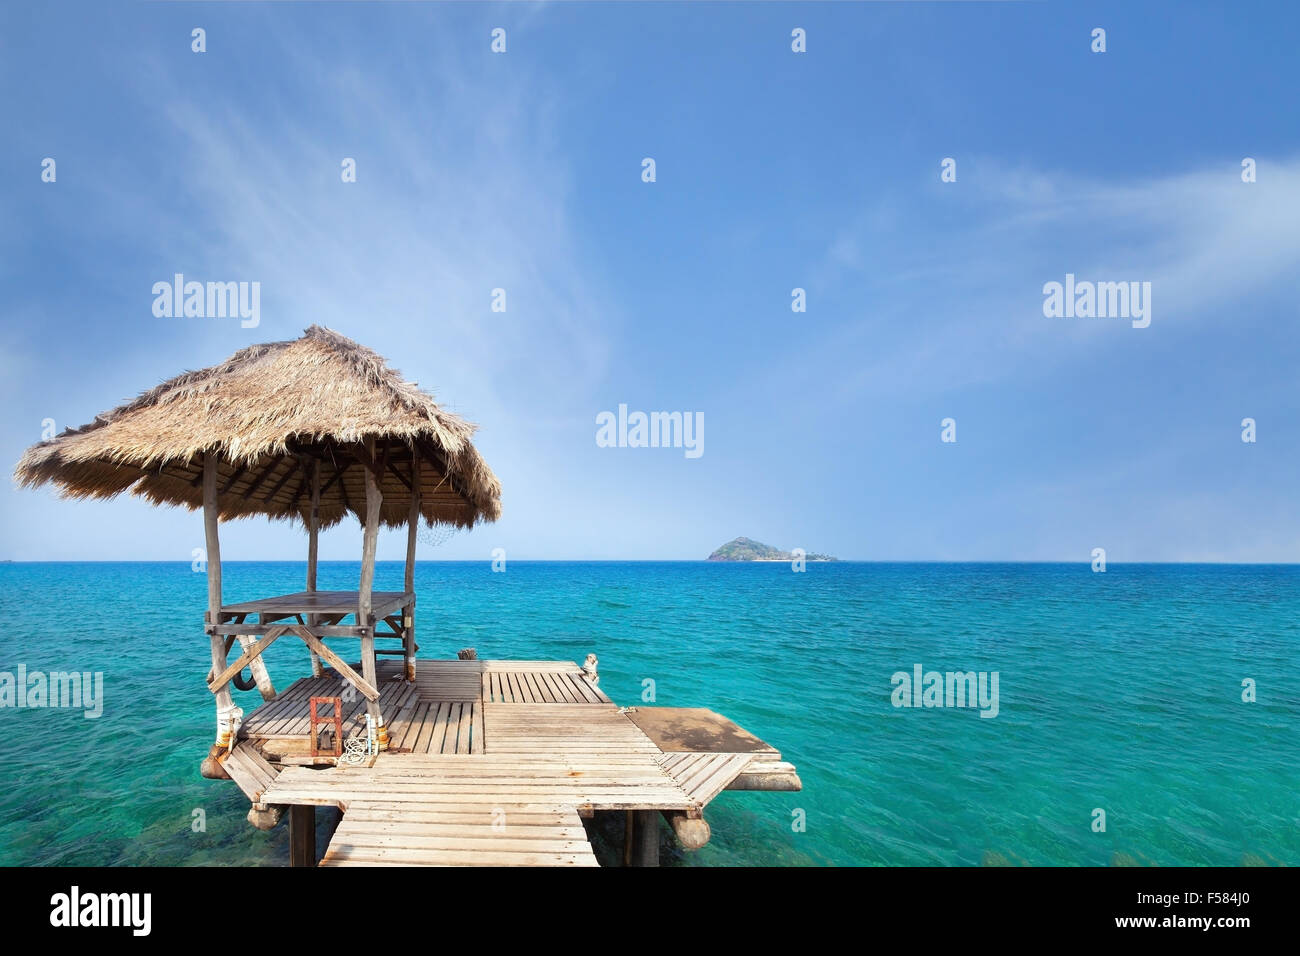 summer holidays, paradise travel destination Stock Photo